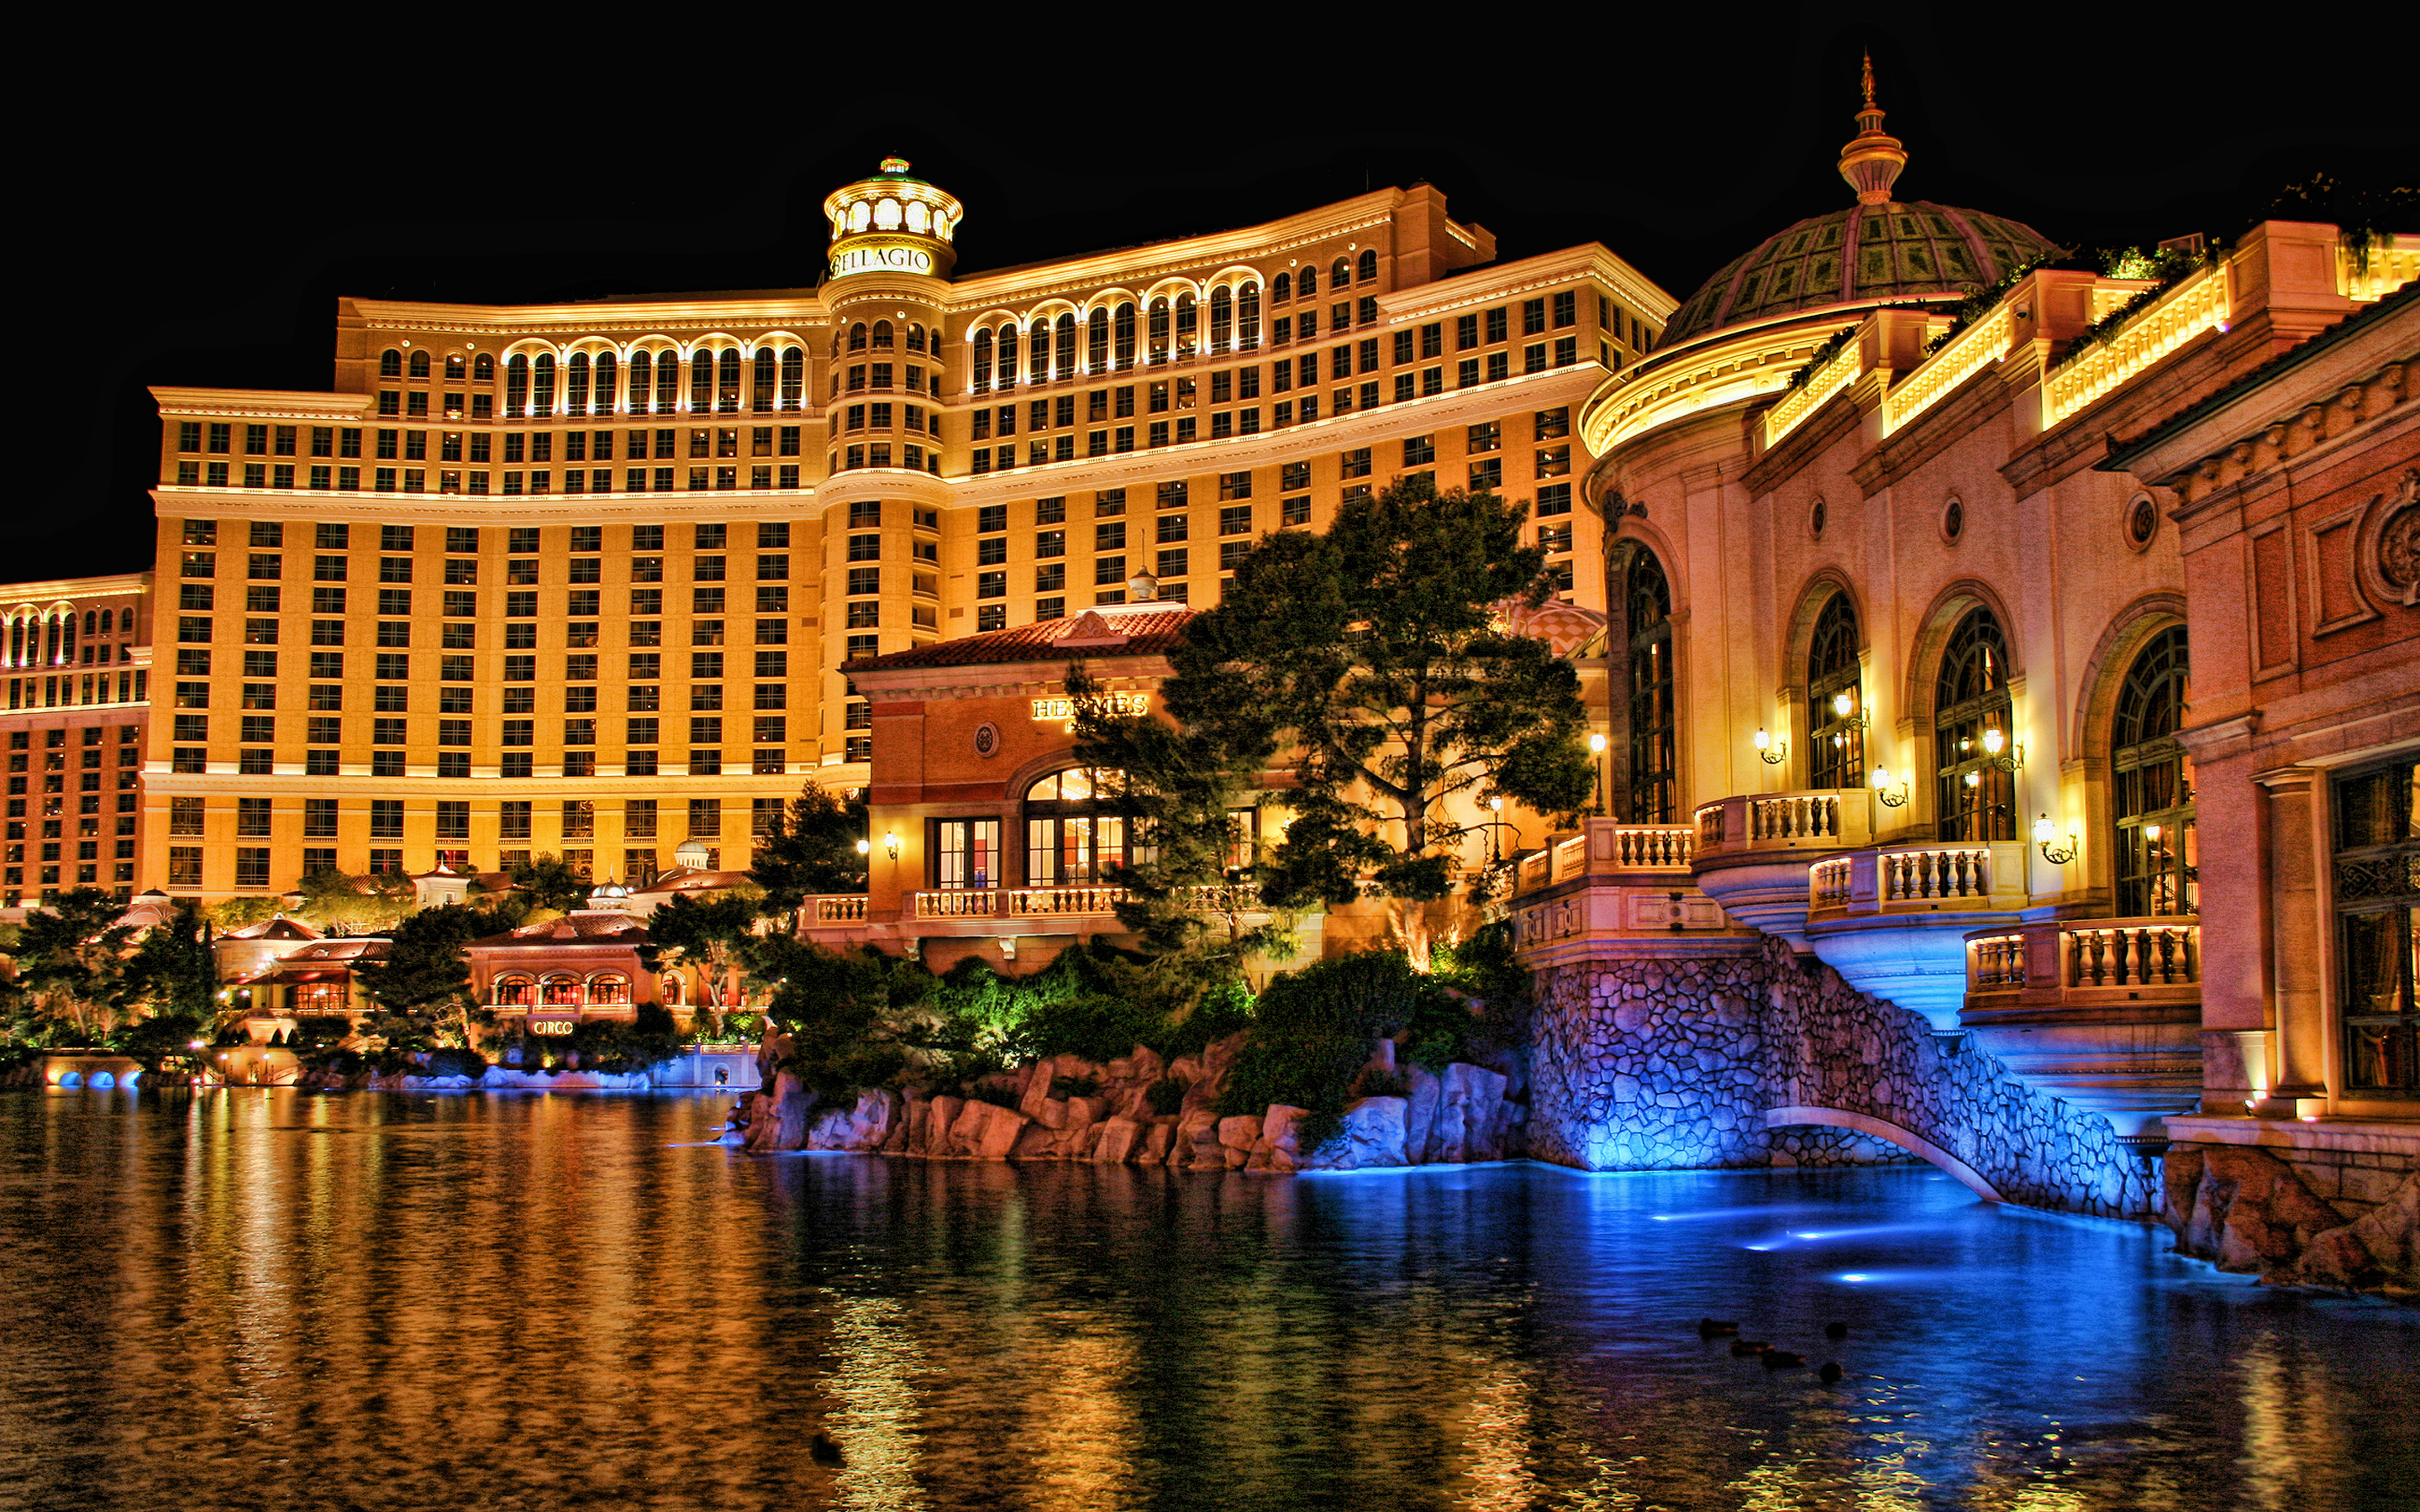 Luxury-Bellagio-Hotel-and-Casino-Las-Vegas-Nevada-North-America-Beautiful-HD-Desktop-Wallpaper-2880x1800.jpg